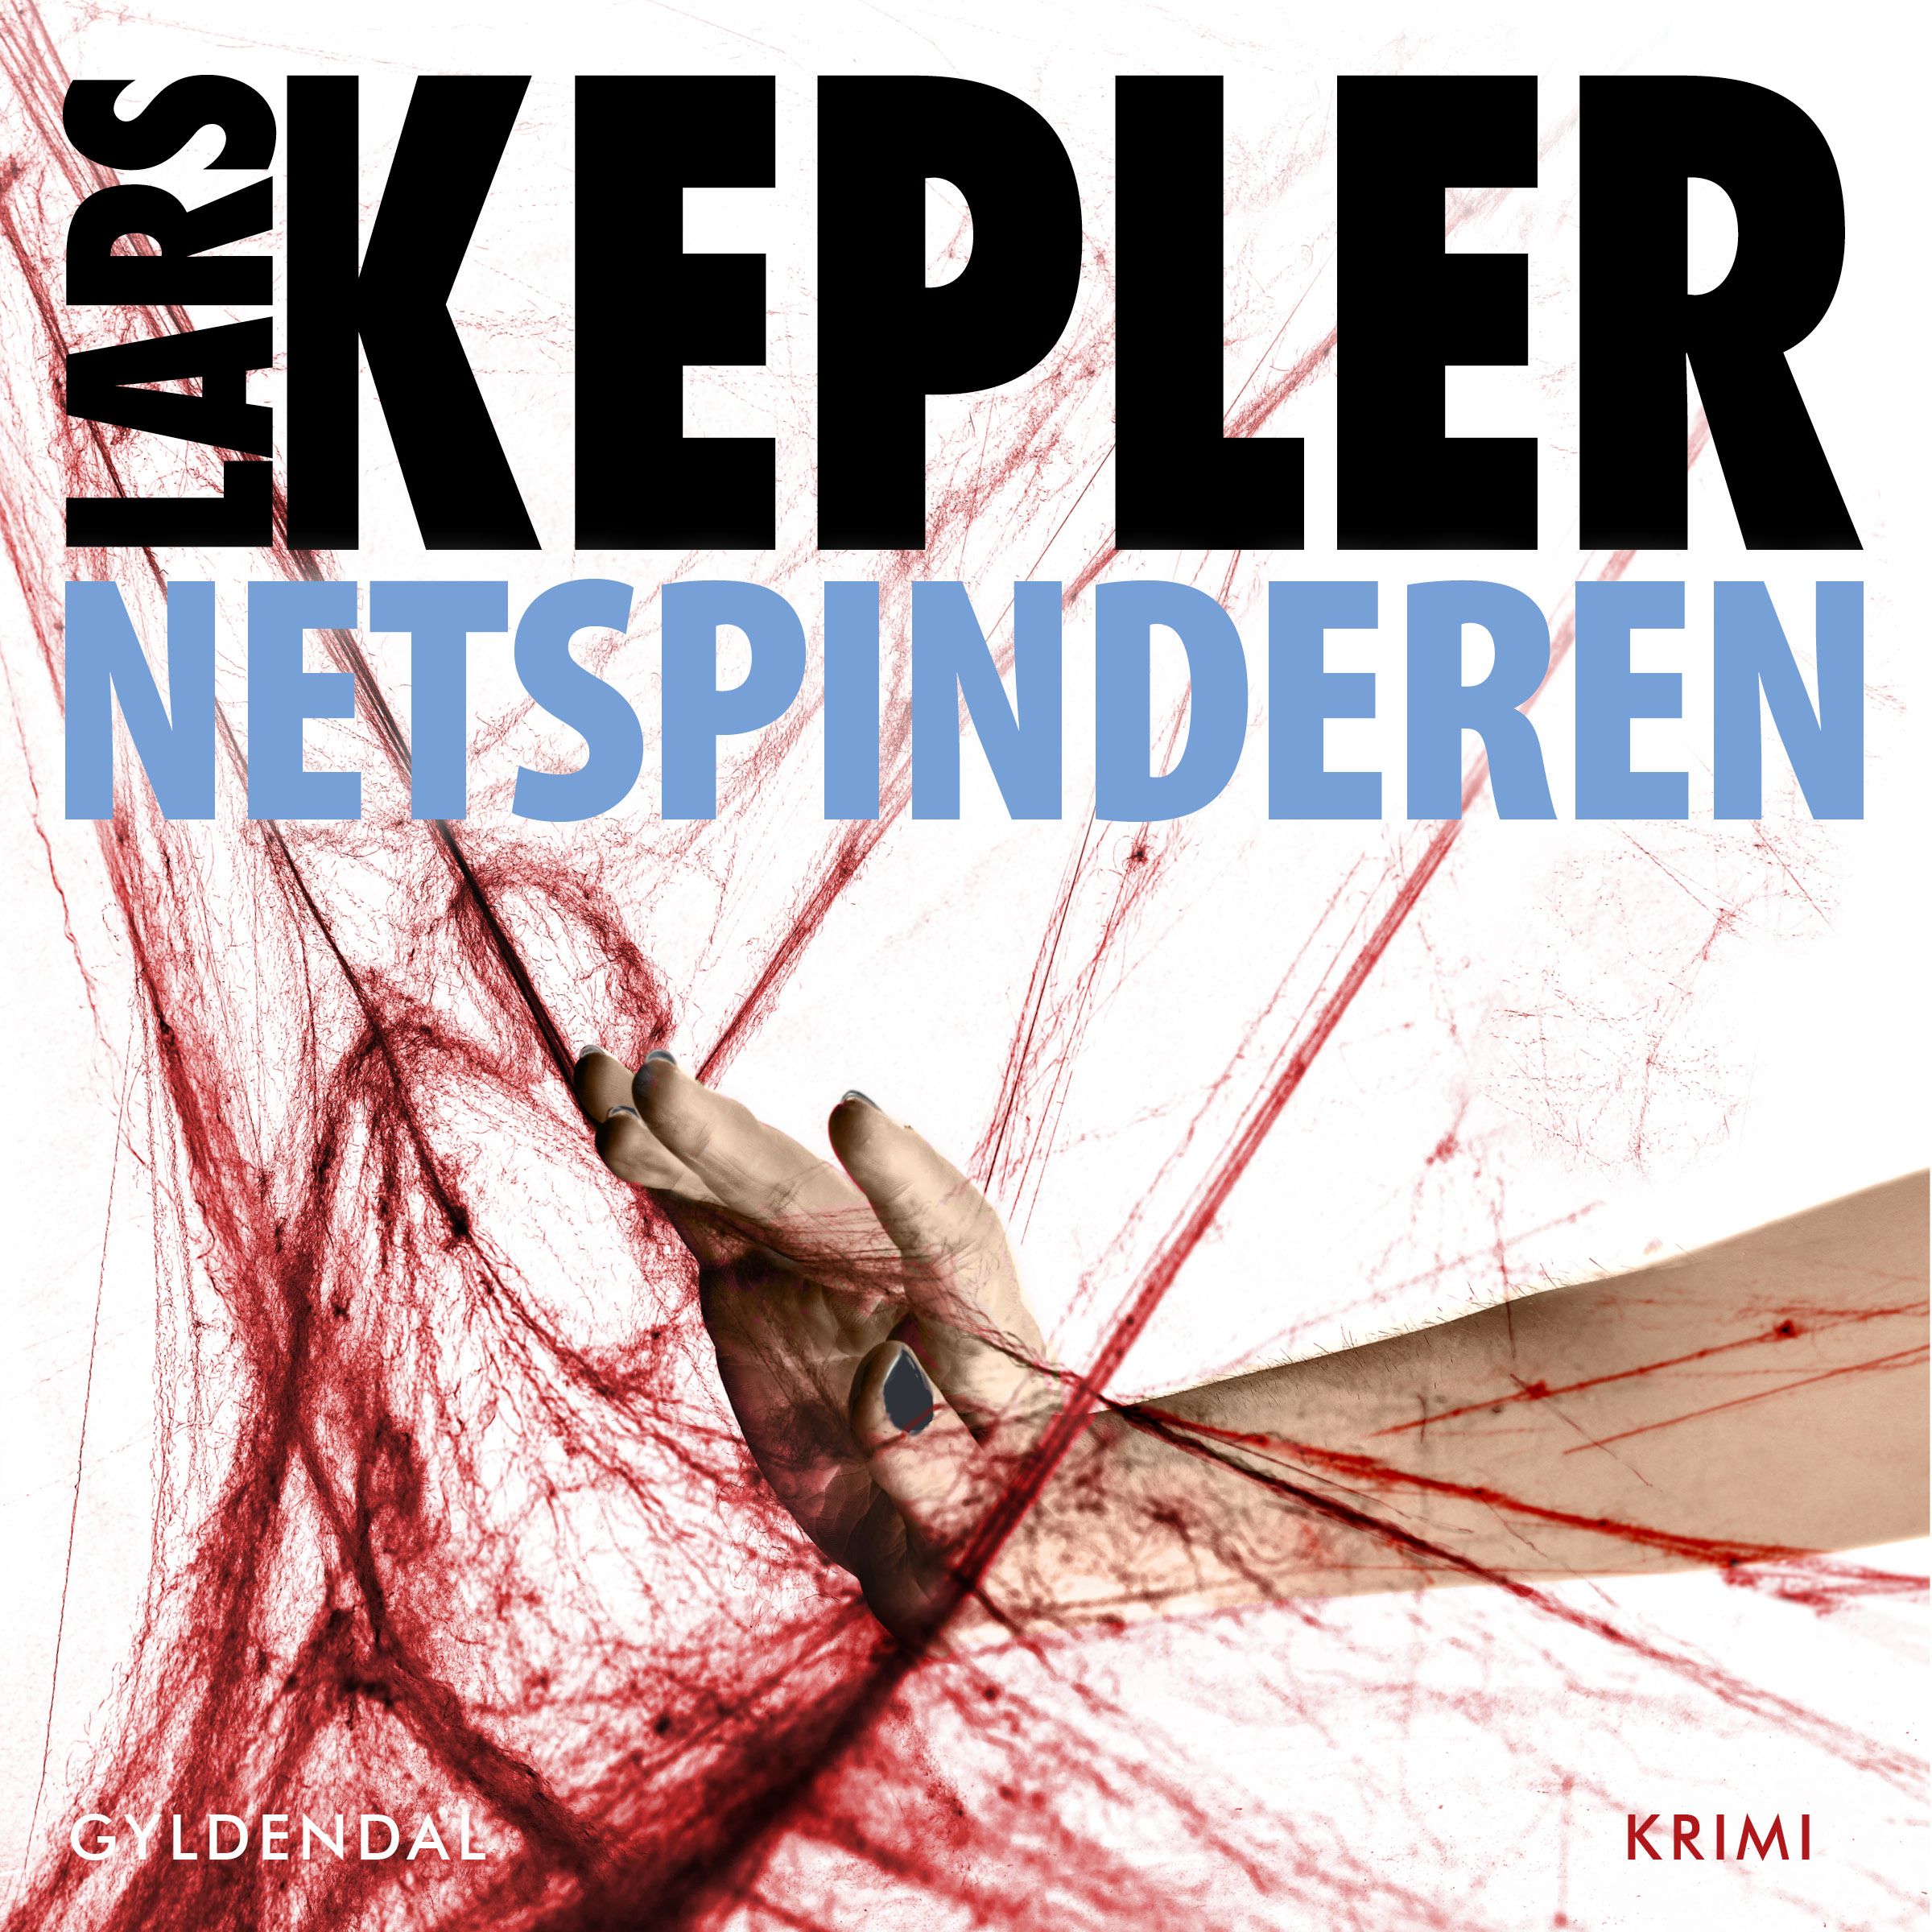 Netspinderen, audiobook by Lars Kepler